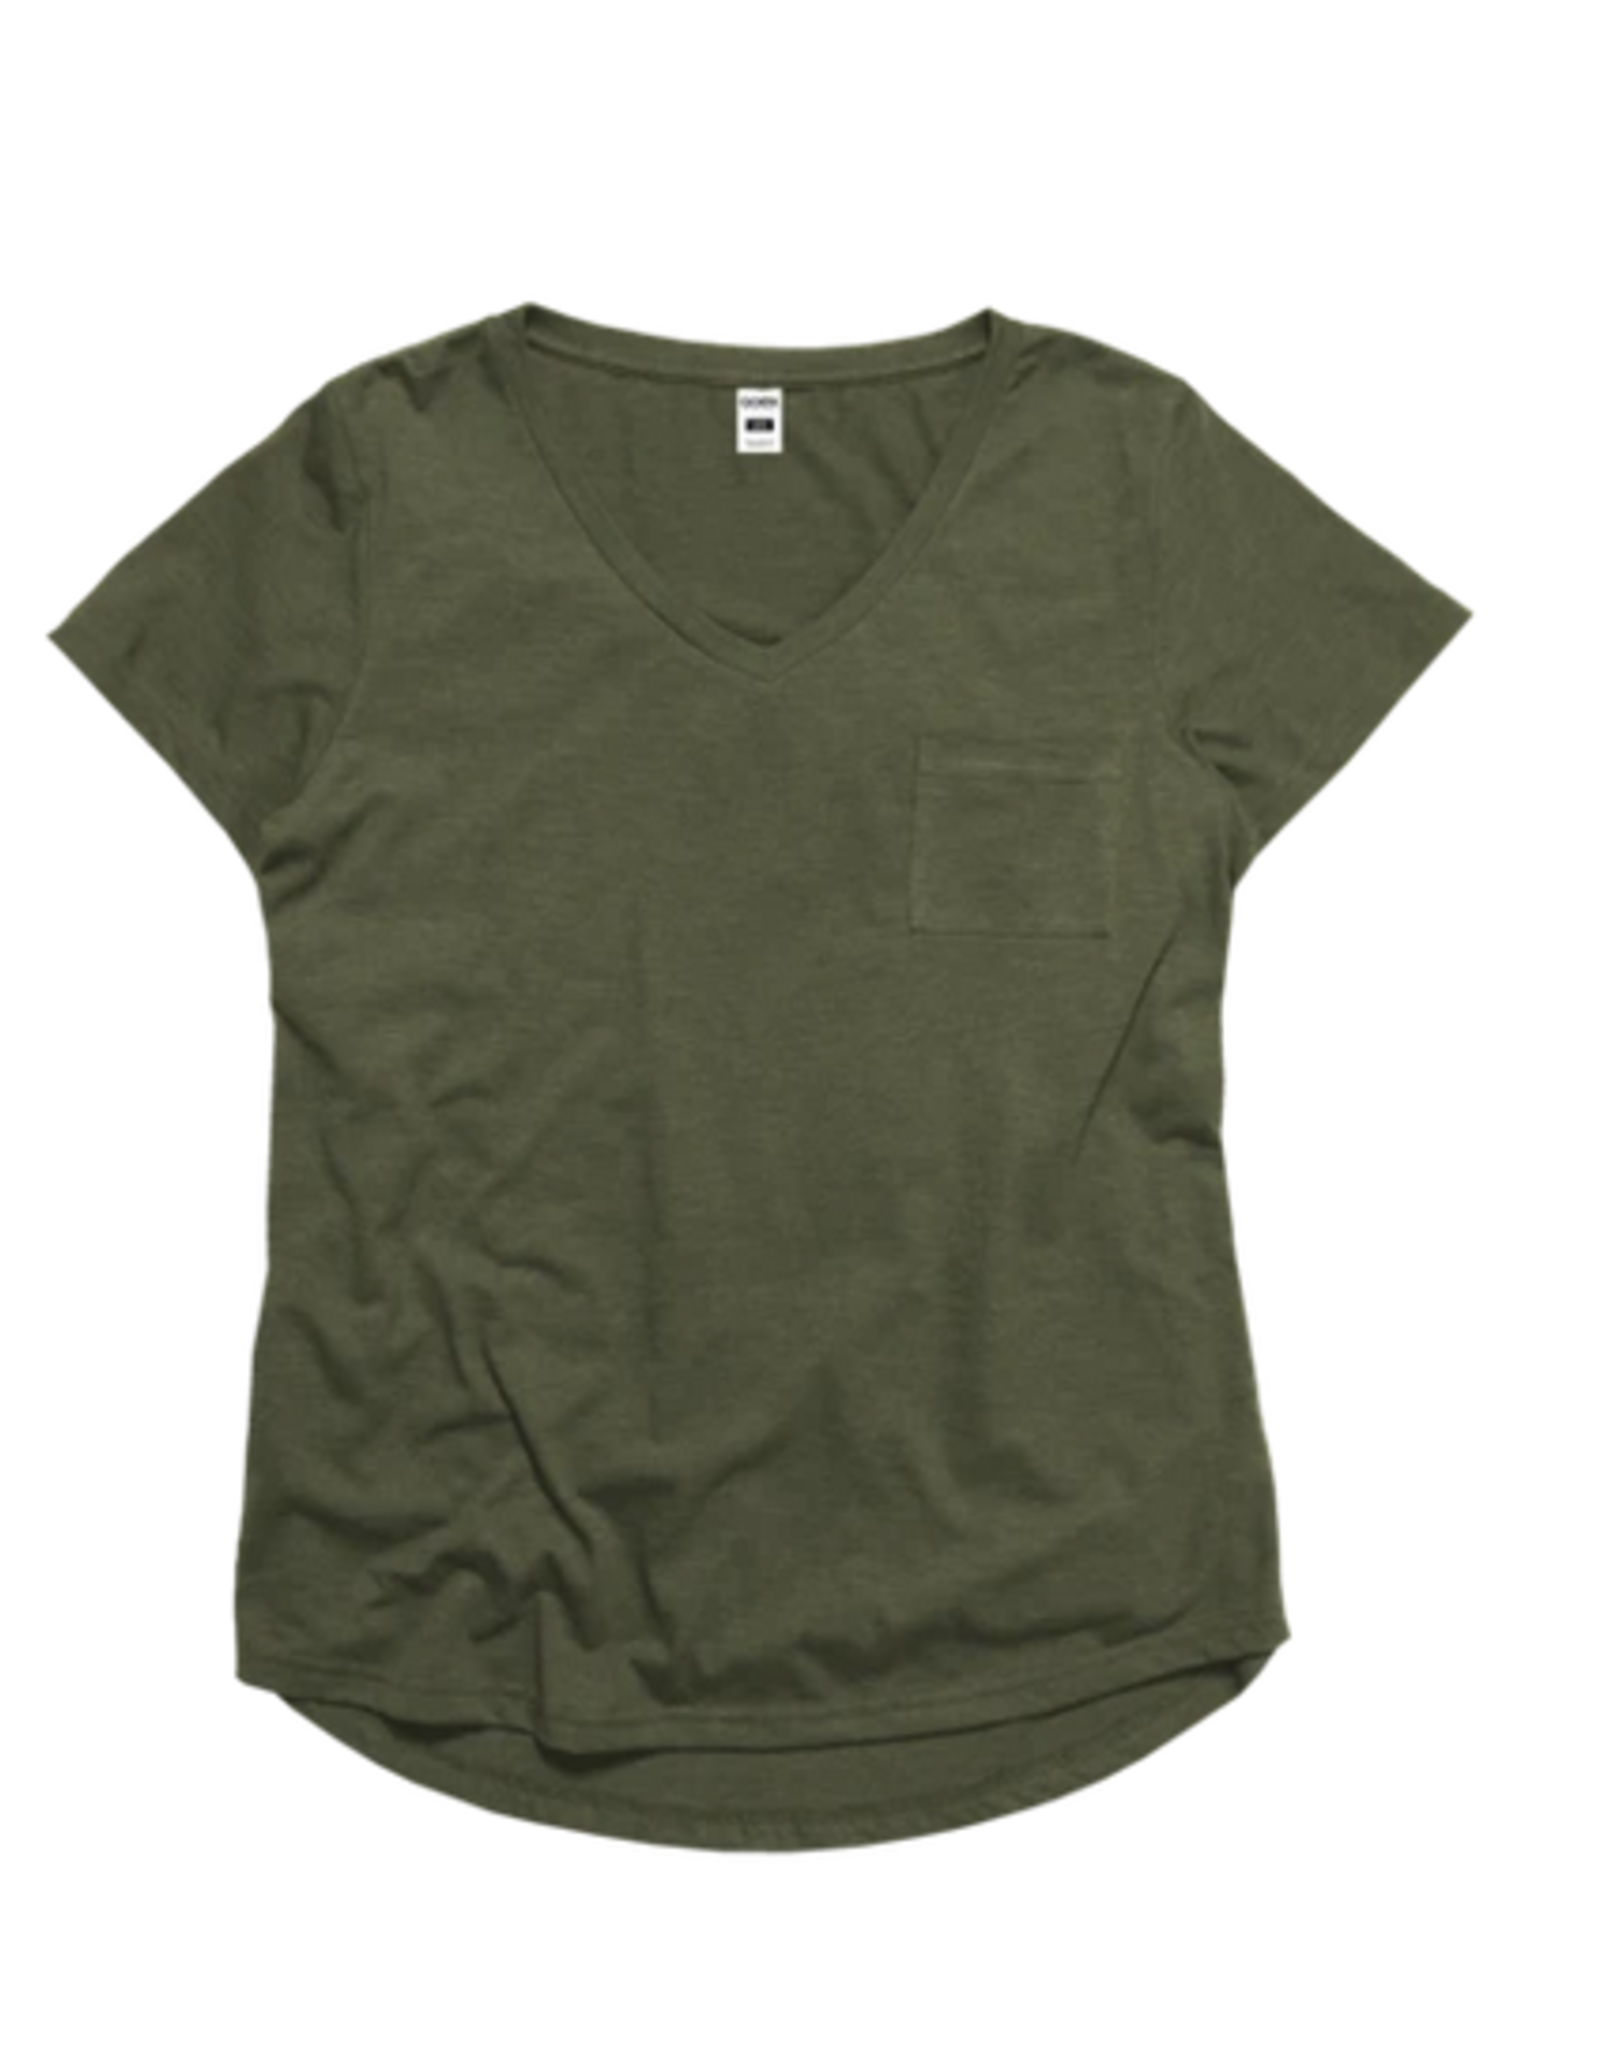 Haiti T-Shirt Women's Olive Triblend (L) - Haiti/USA